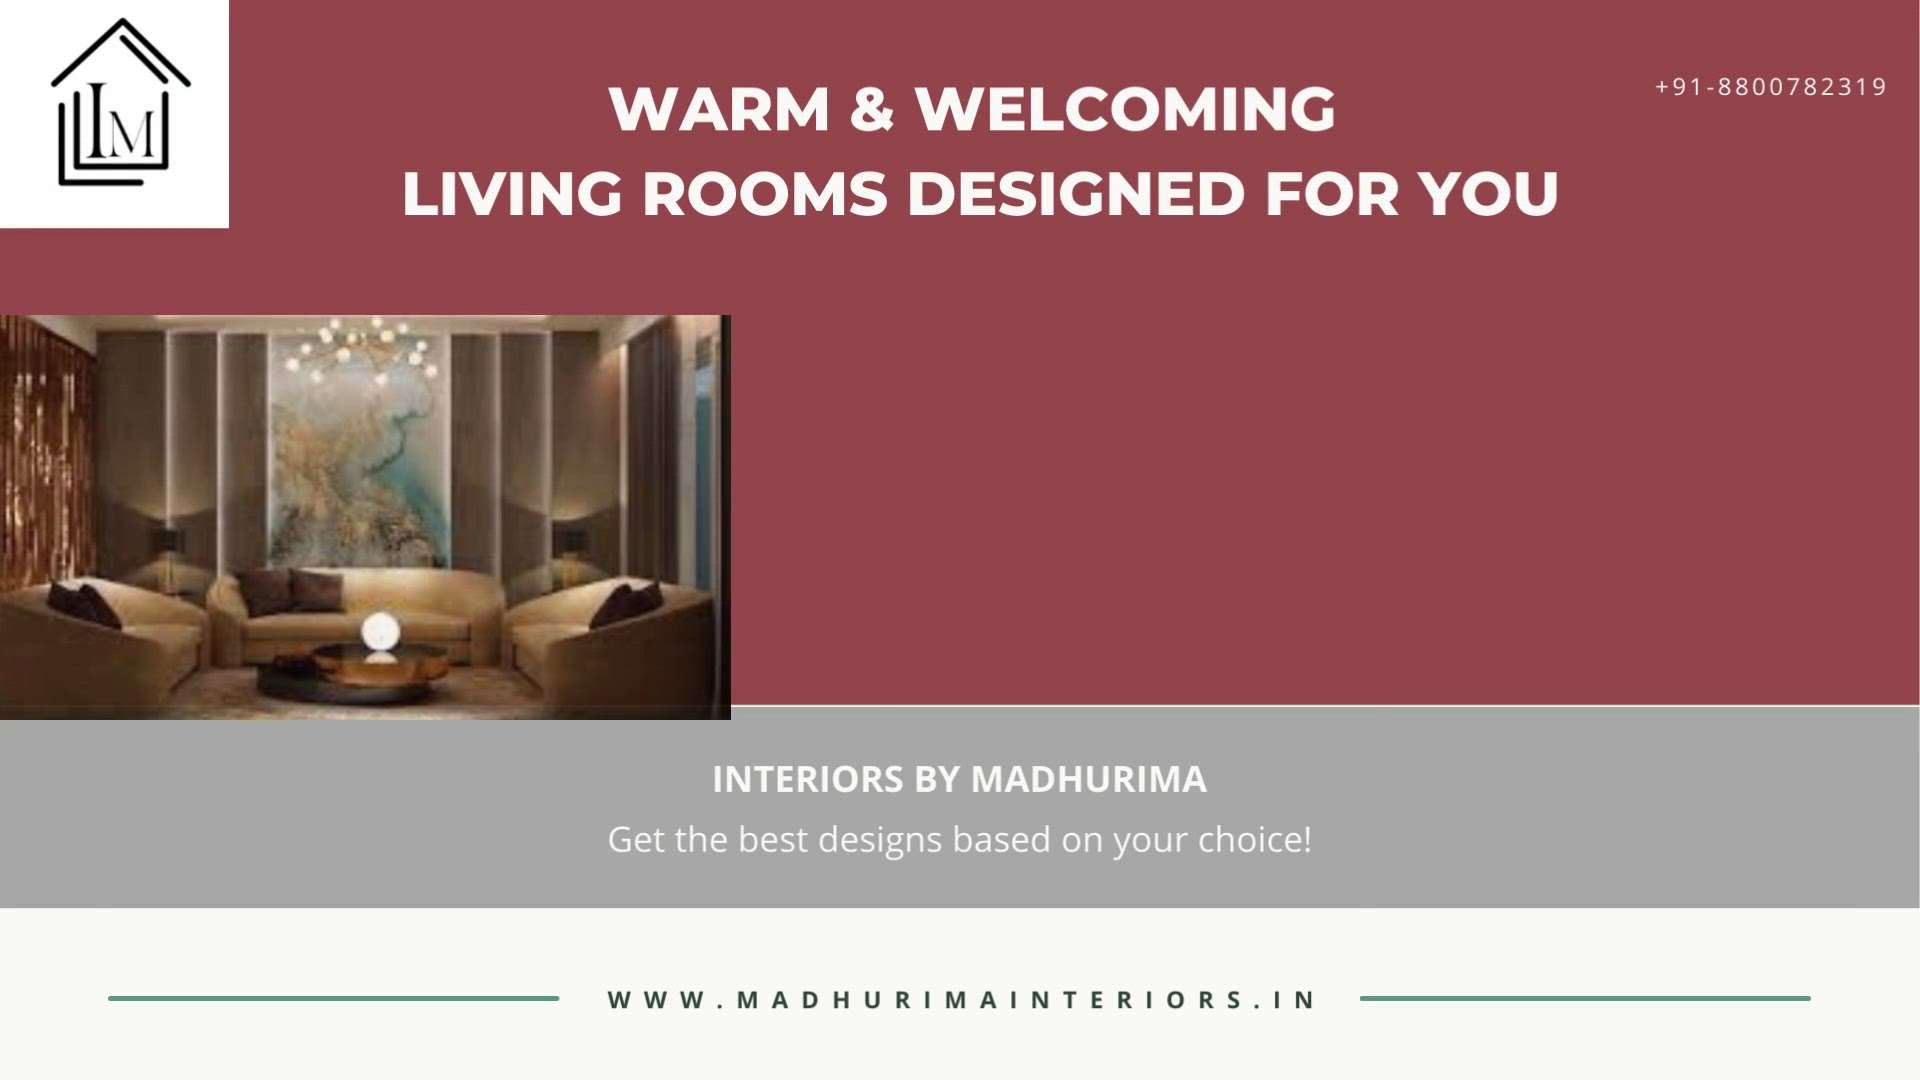 #IMInteriors
#InteriorsbyMadhurima
#bedroom
#livingroom
#luxury
#decor
#kitchen
#cabinets
#modern